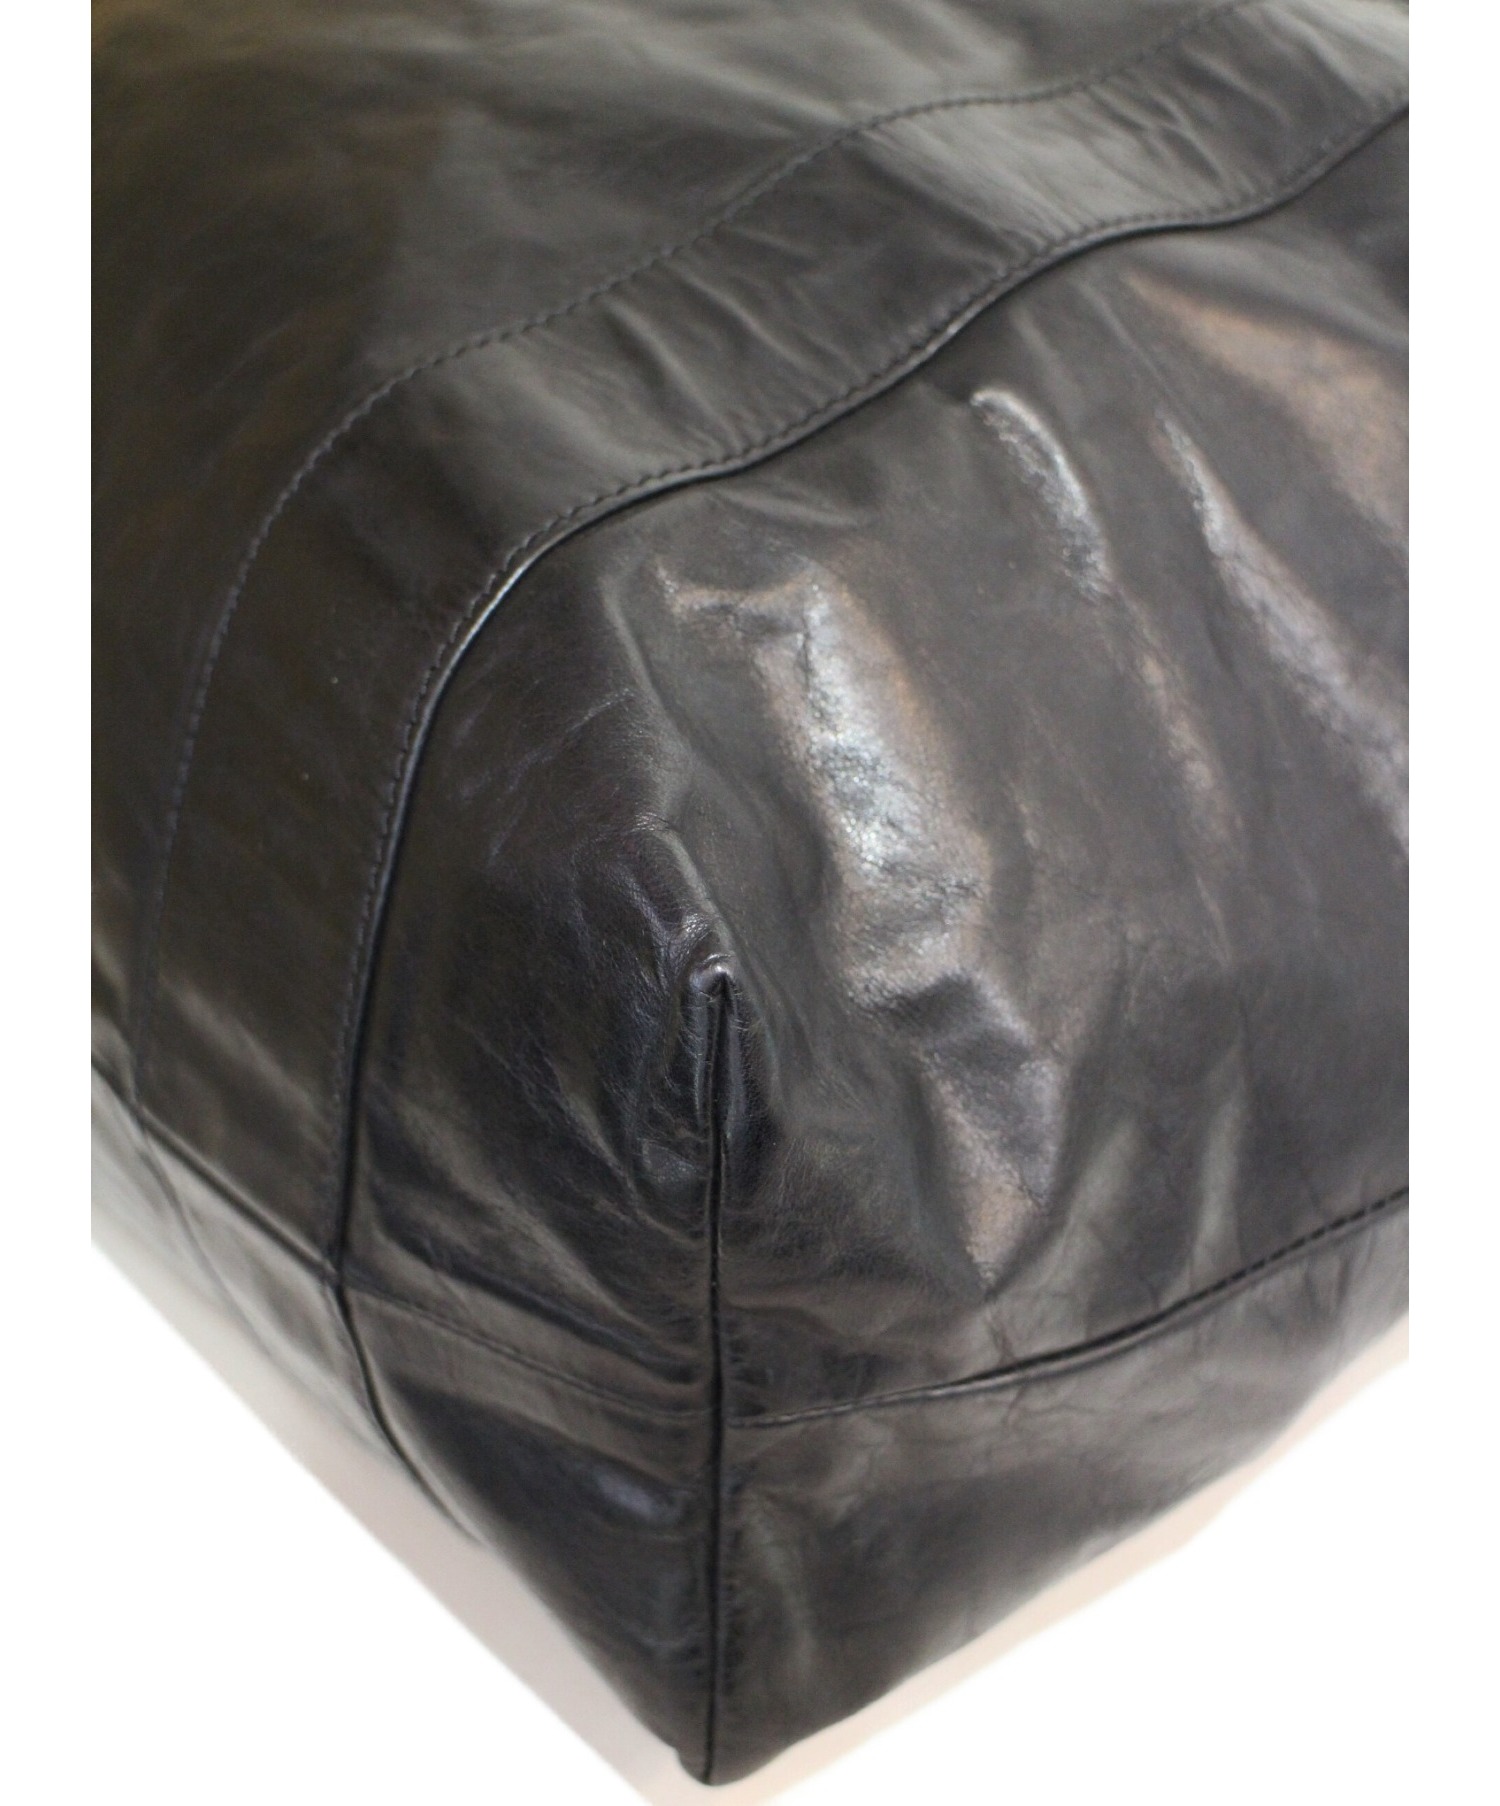 Maison Margiela (メゾンマルジェラ) セーラーバッグ ブラック サイズ:- Sailor Bag S35WC0044